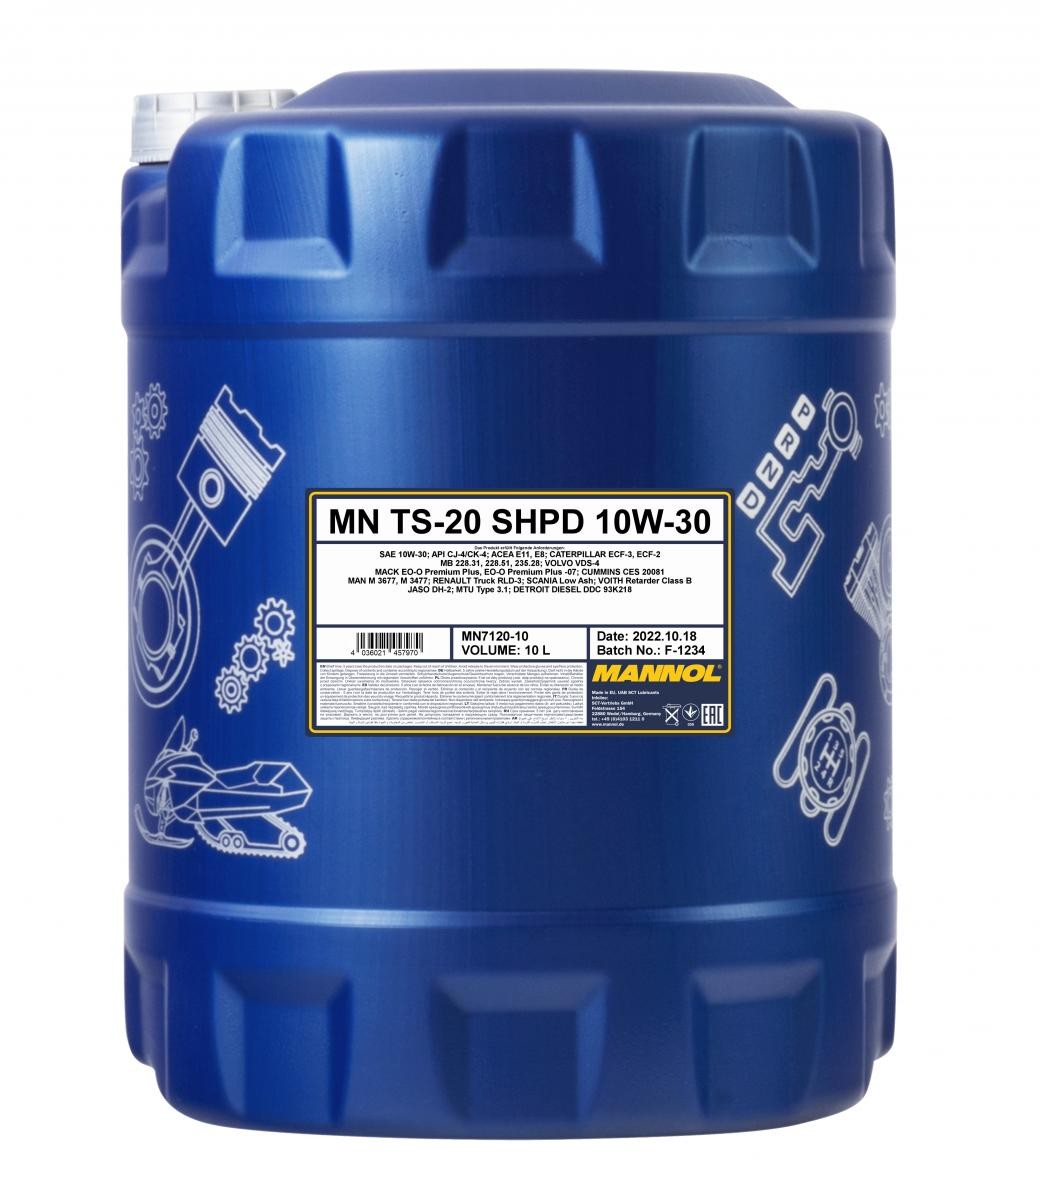 Aceite motor 10W-30 longlife diésel - MN7120-10 MANNOL TS-20, SHPD